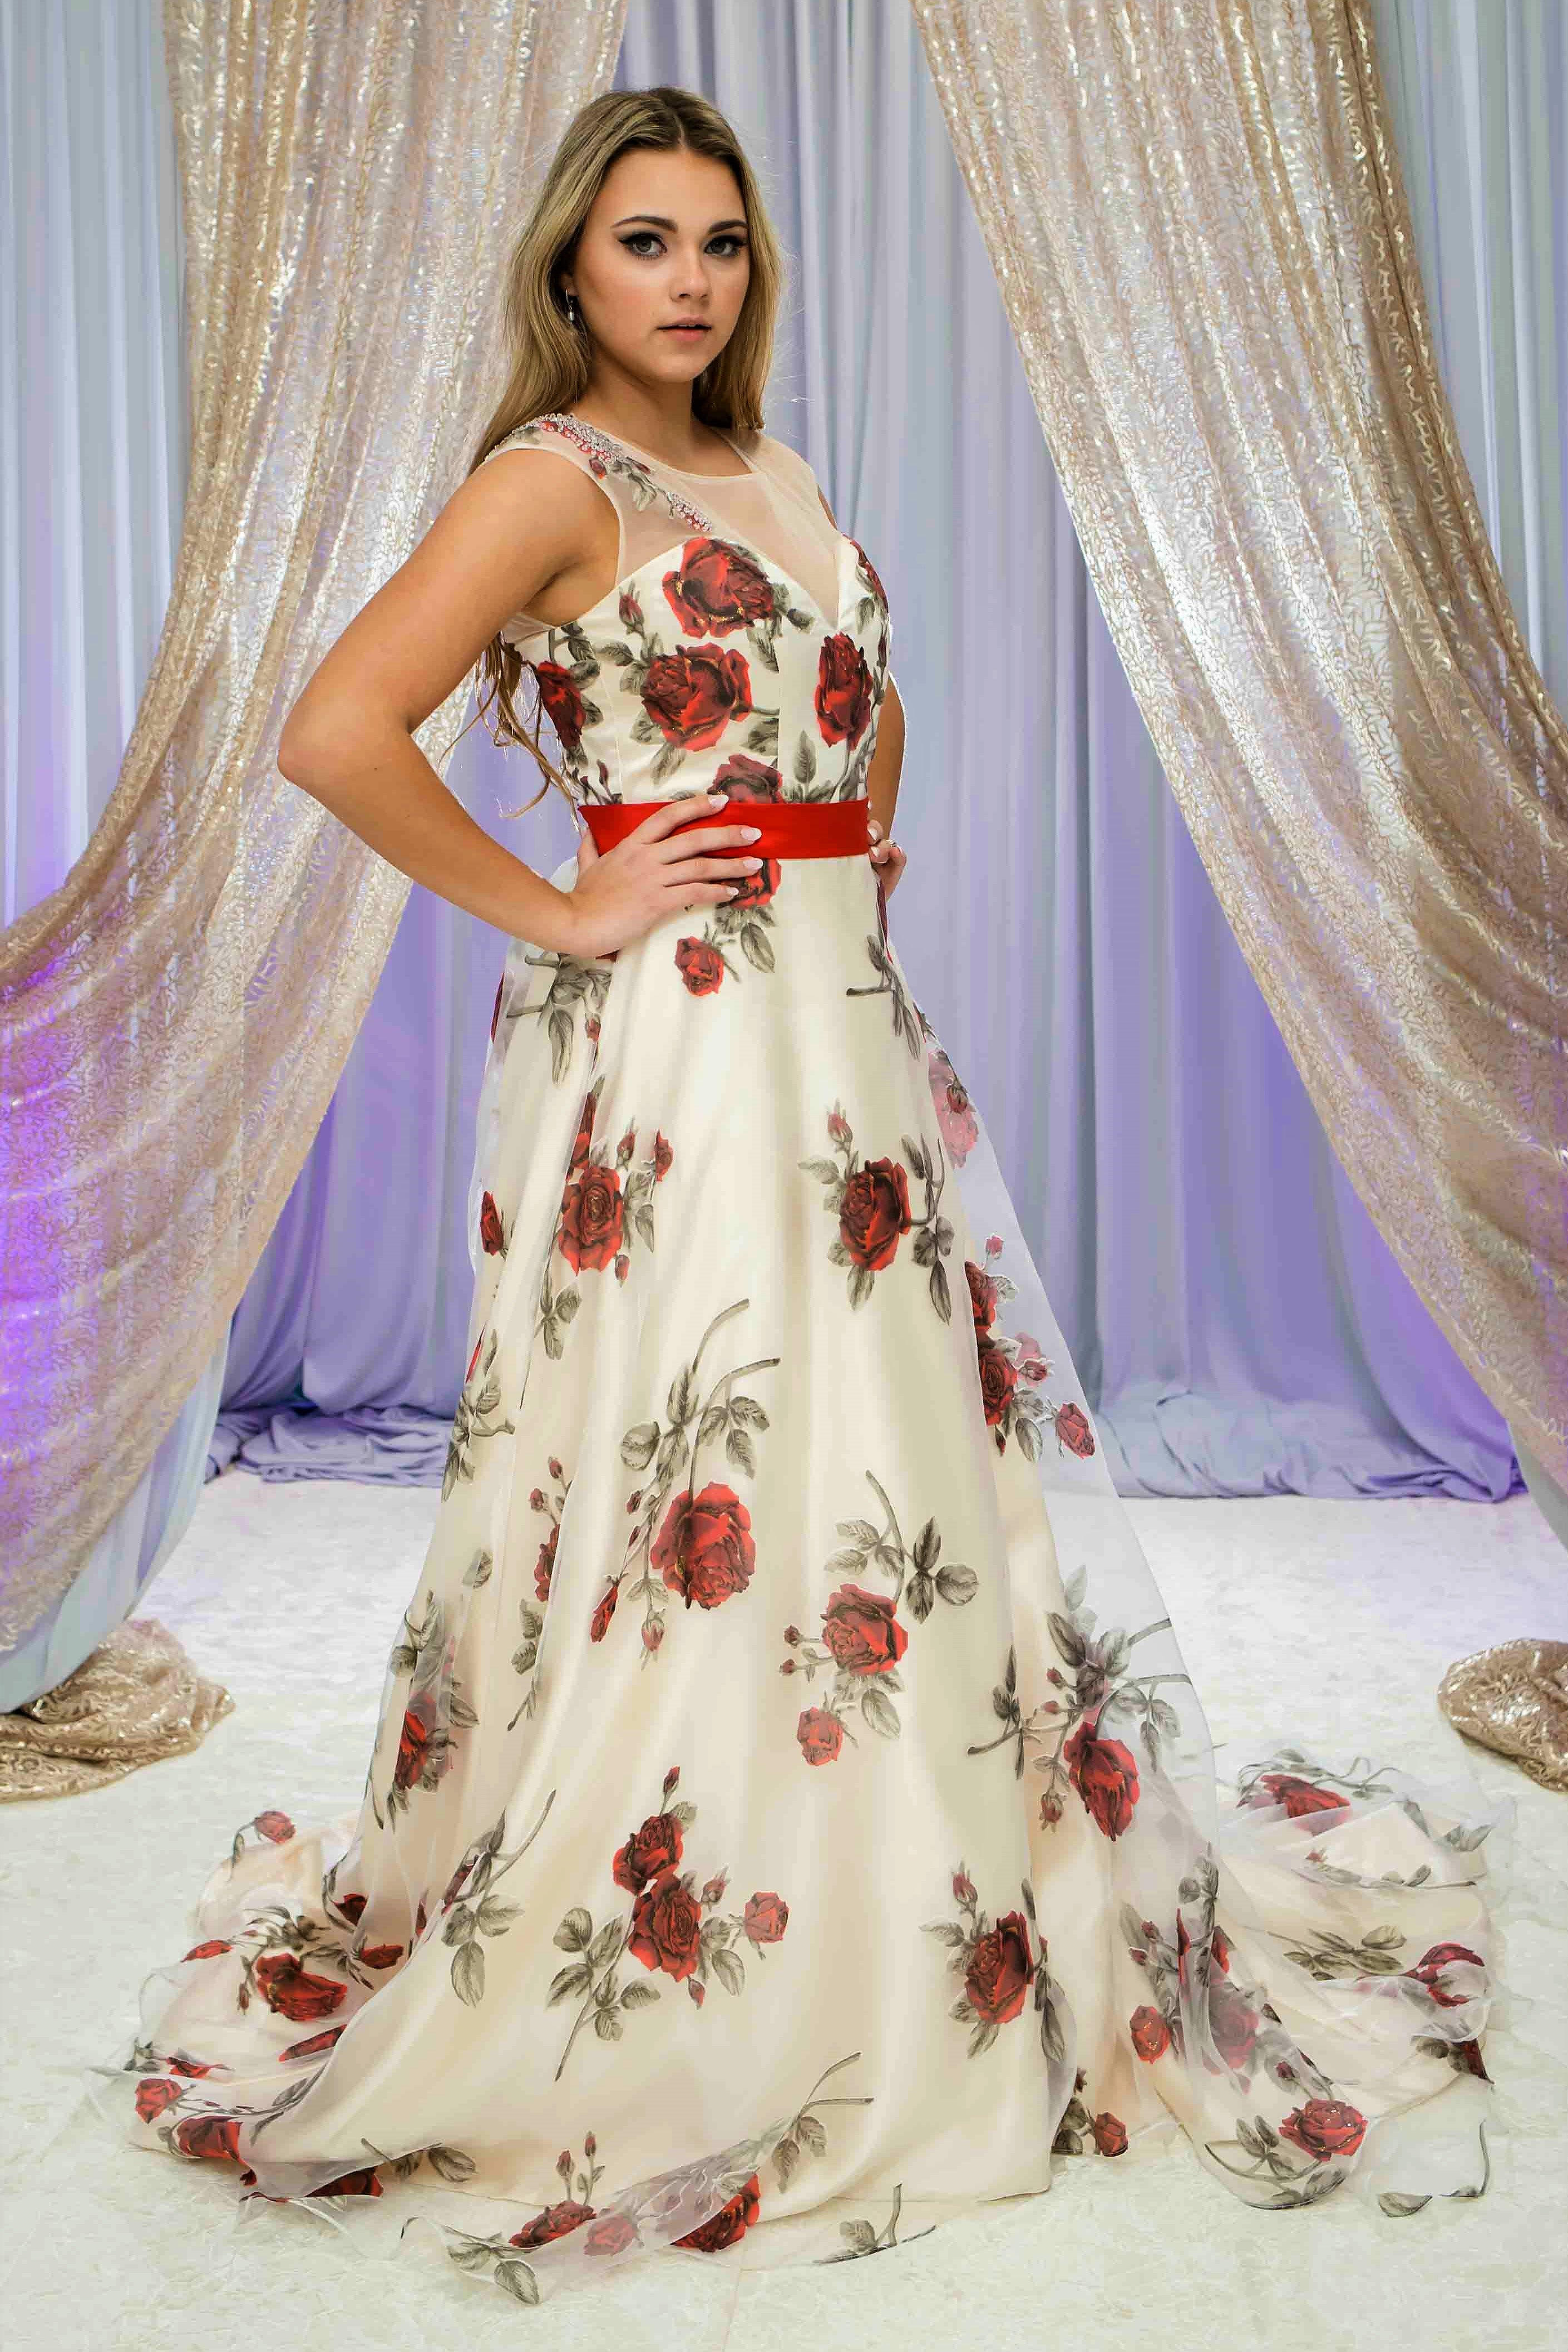 Floral Wedding Dresses: 42 Magical Looks + Faqs